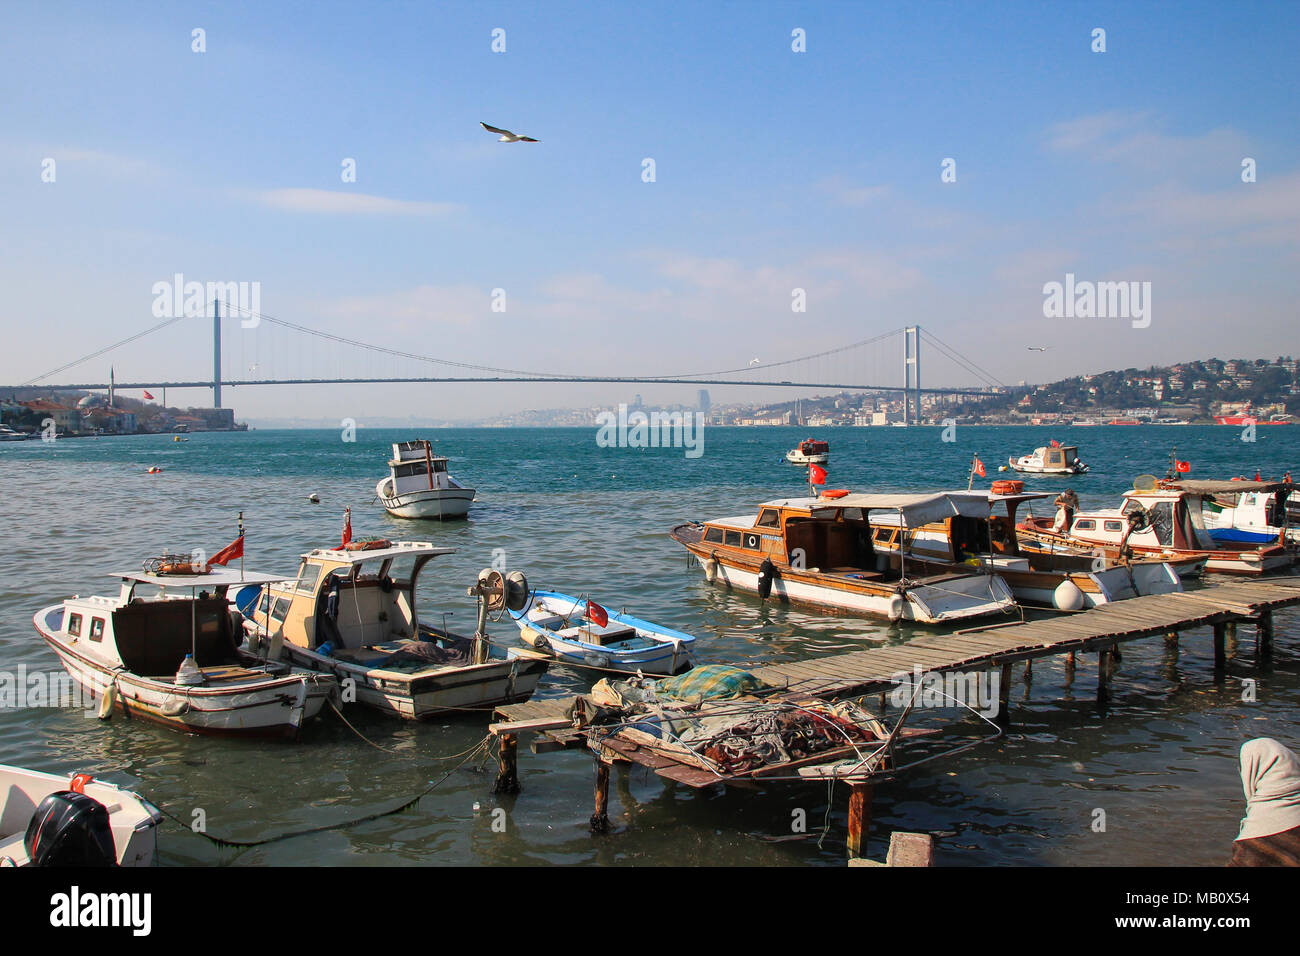 Boats in the Bosphorus Stock Photo